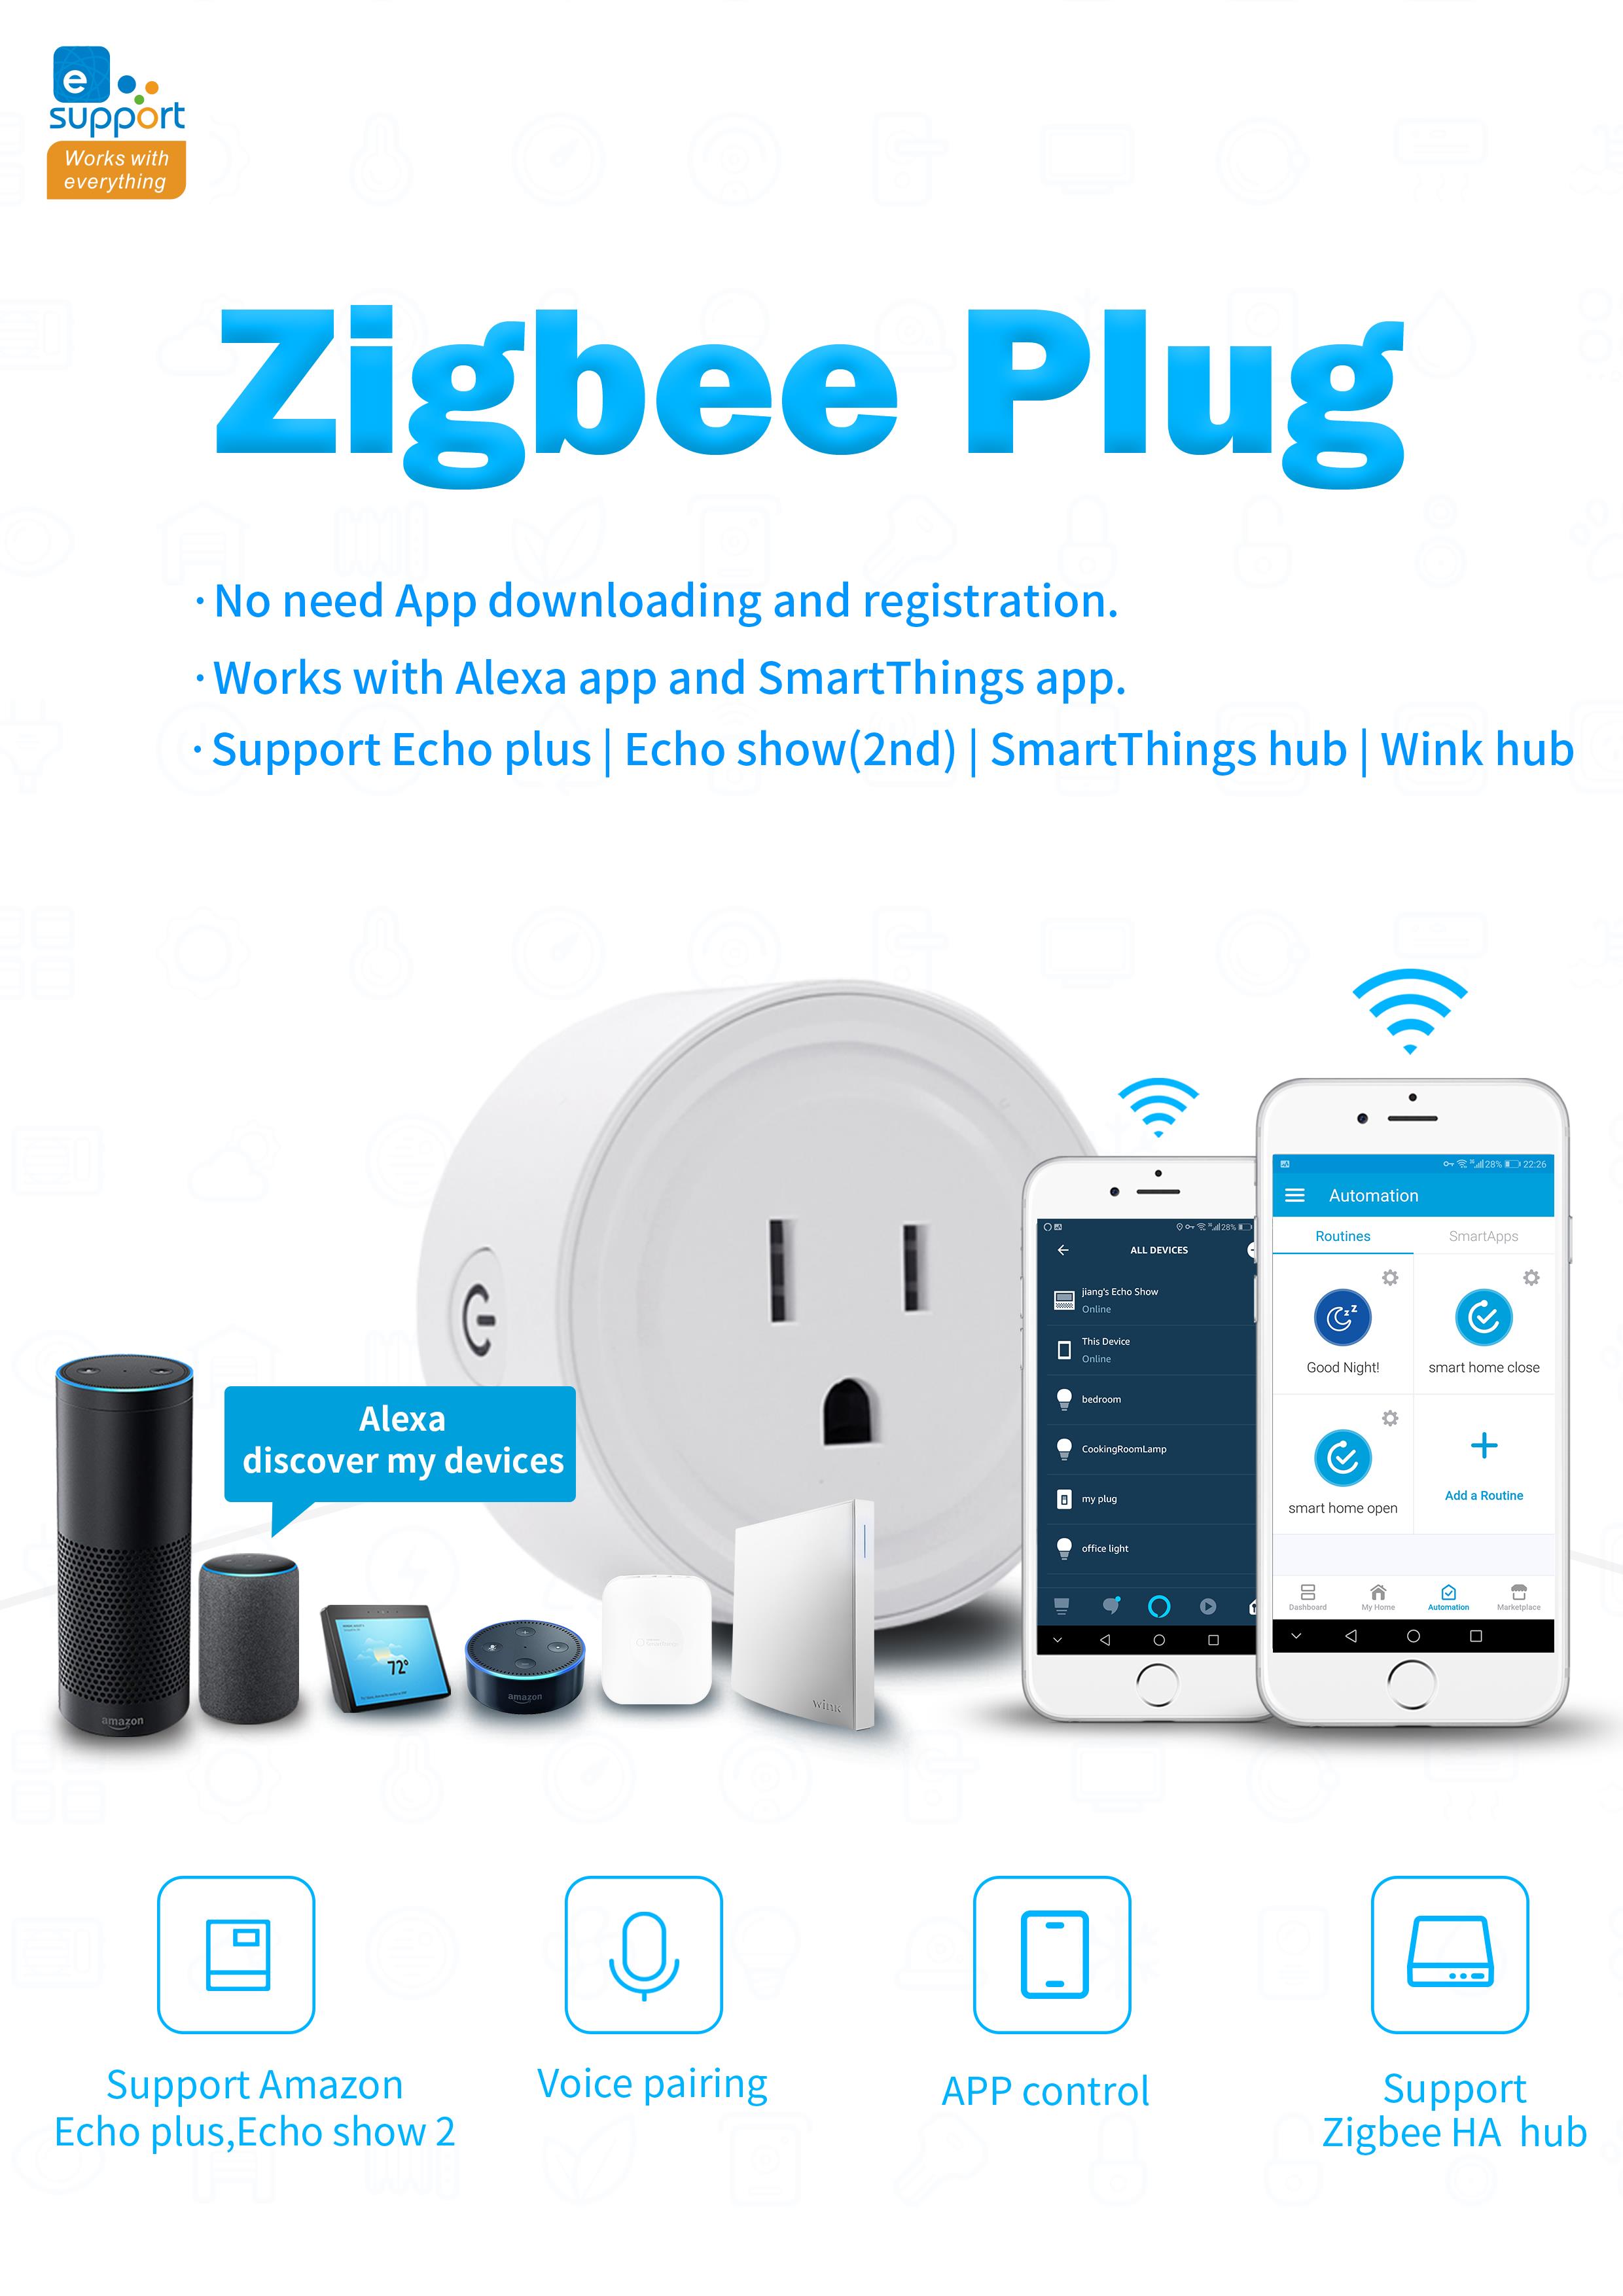 Mini-Smart-WiFi-Switch-Power-Socket-Outlet-US-Plug-Support-3-Type-Echo-Device-AlexaSmart-Things-App-1447885-1